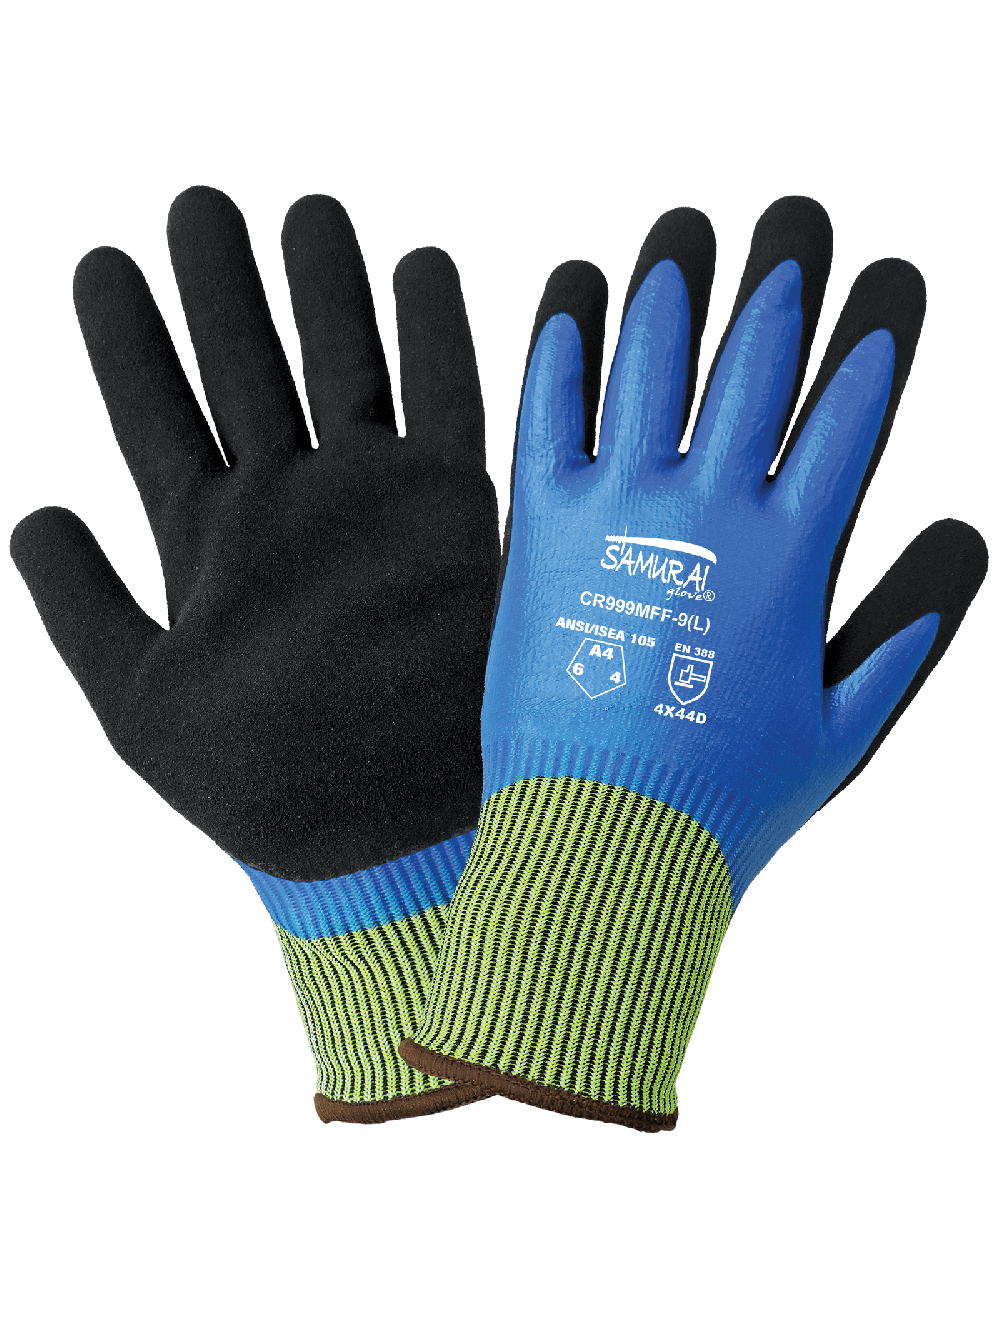 Samurai Glove® Tuffalene® Liquid and Cut Resistant Double-Coated Gloves - CR999MFF